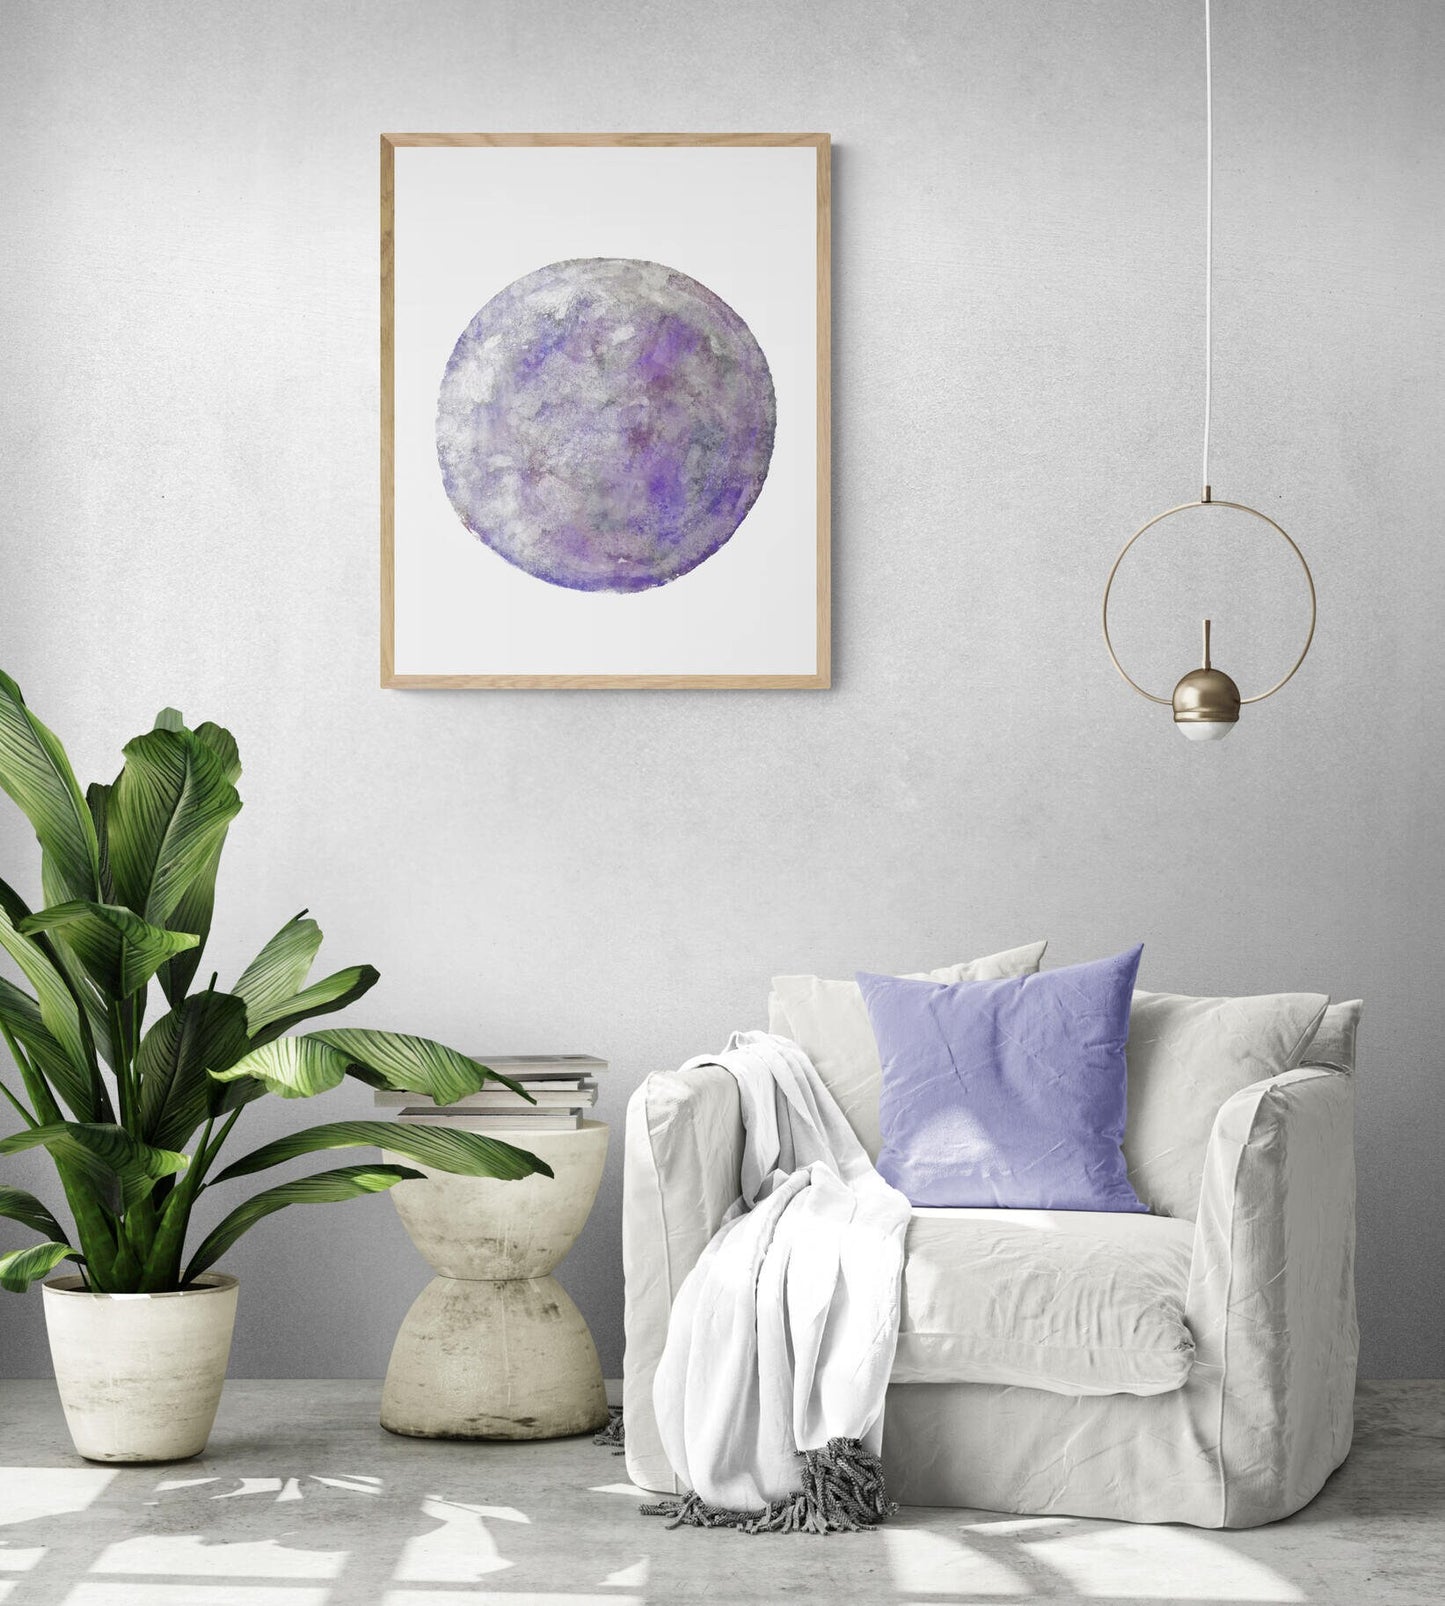 Full Moon Print, Purple Gray Moon Poster, Galaxy Artwork, Home Wall Decor, Modern Bedroom Wall Decor, Lunar phase, Space Art